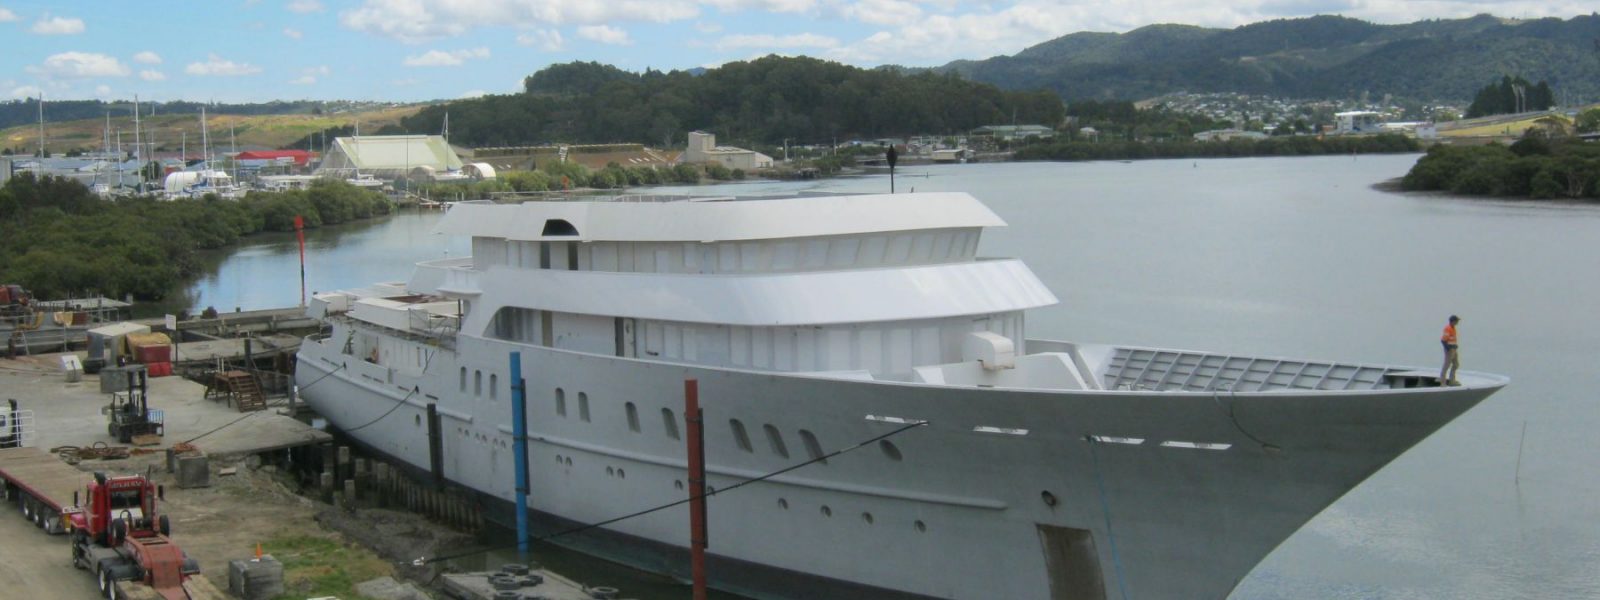 U77 Super-yacht Refit